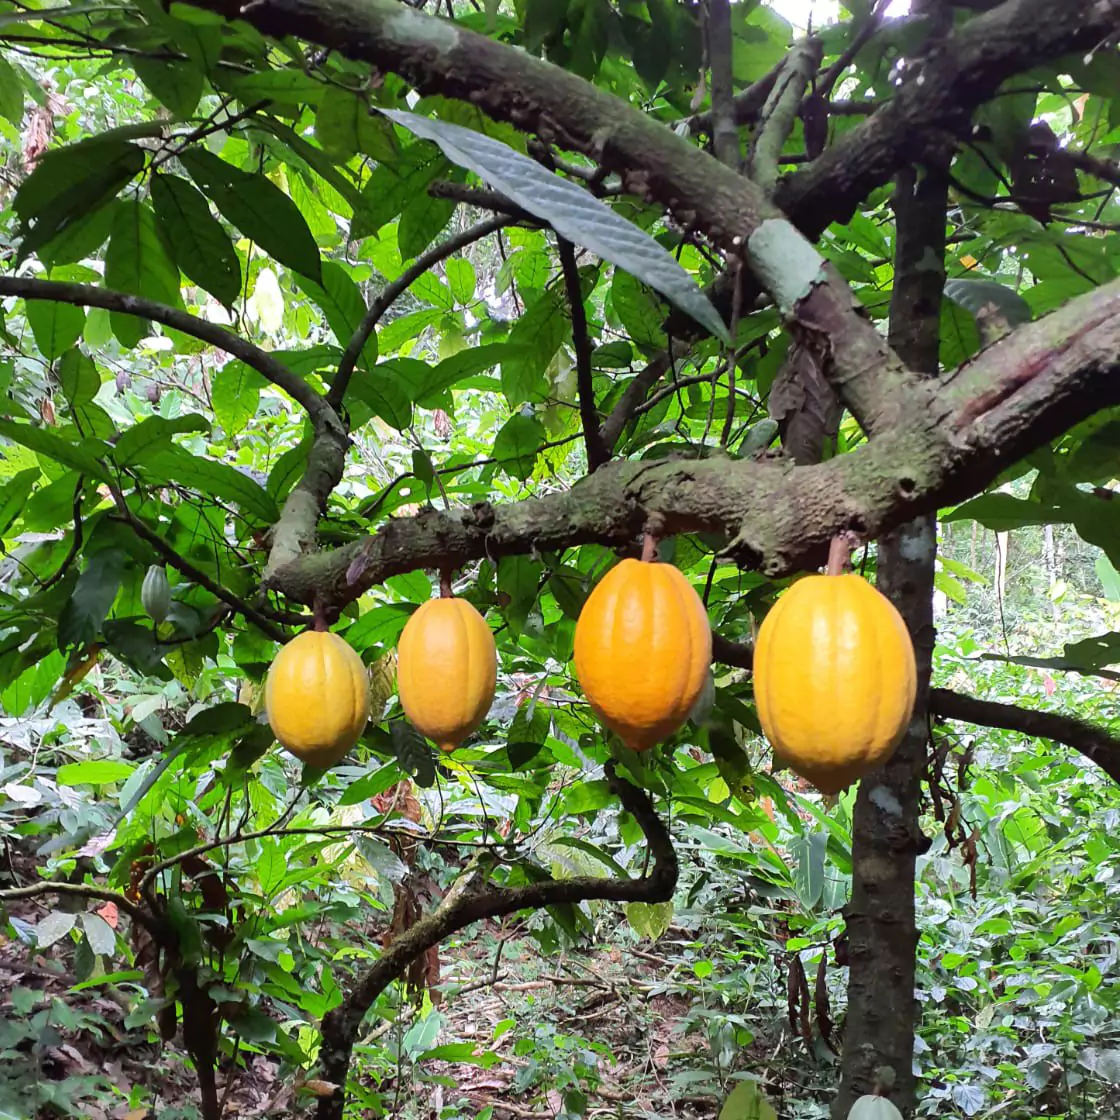 A cocoa plantation